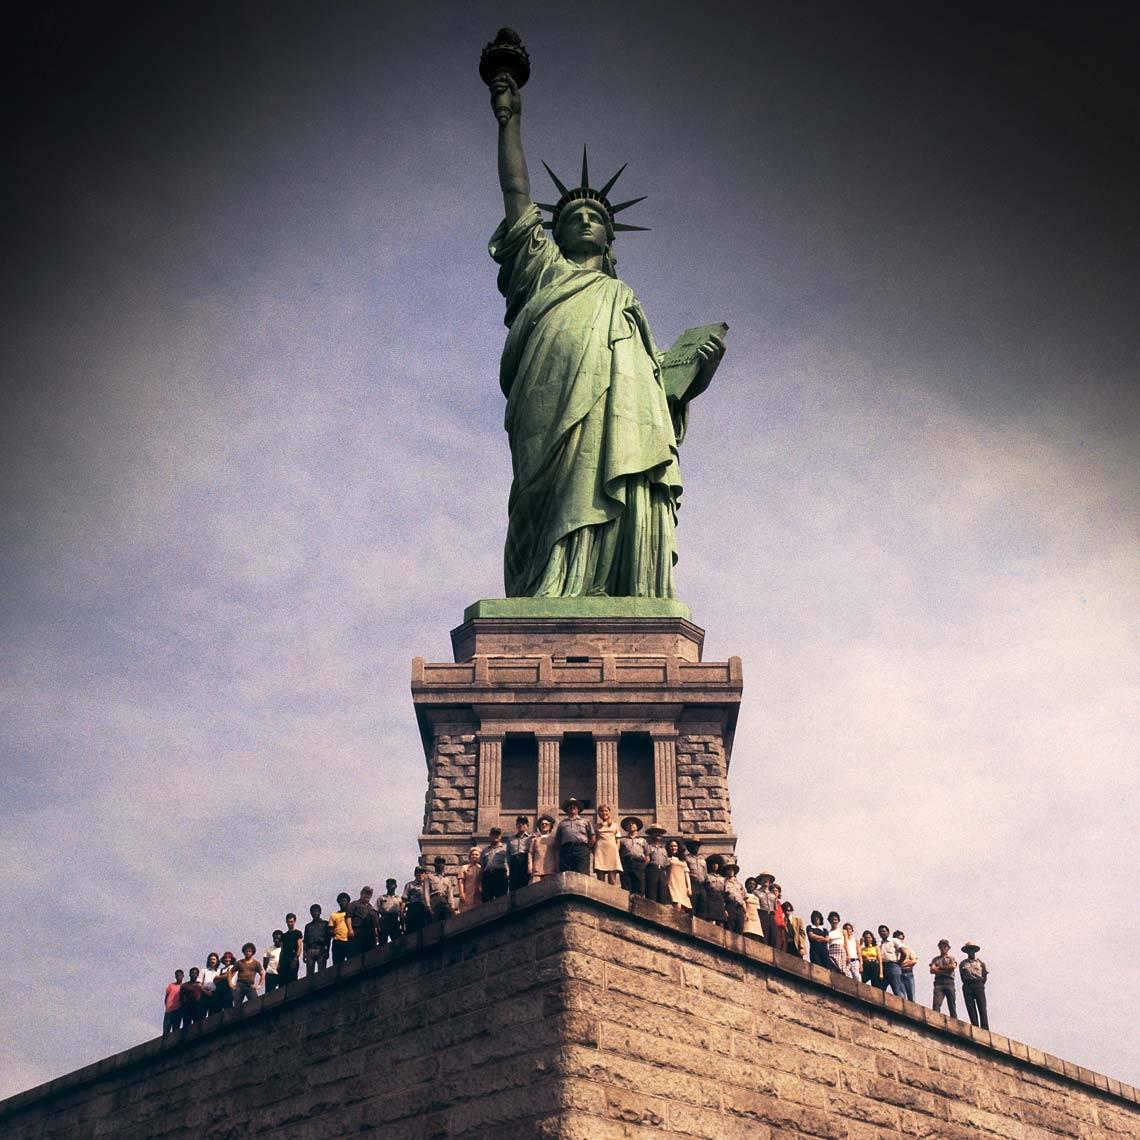 Neal Slavin Color Photograph - Staff of Statue of Liberty, Liberty Island, NY